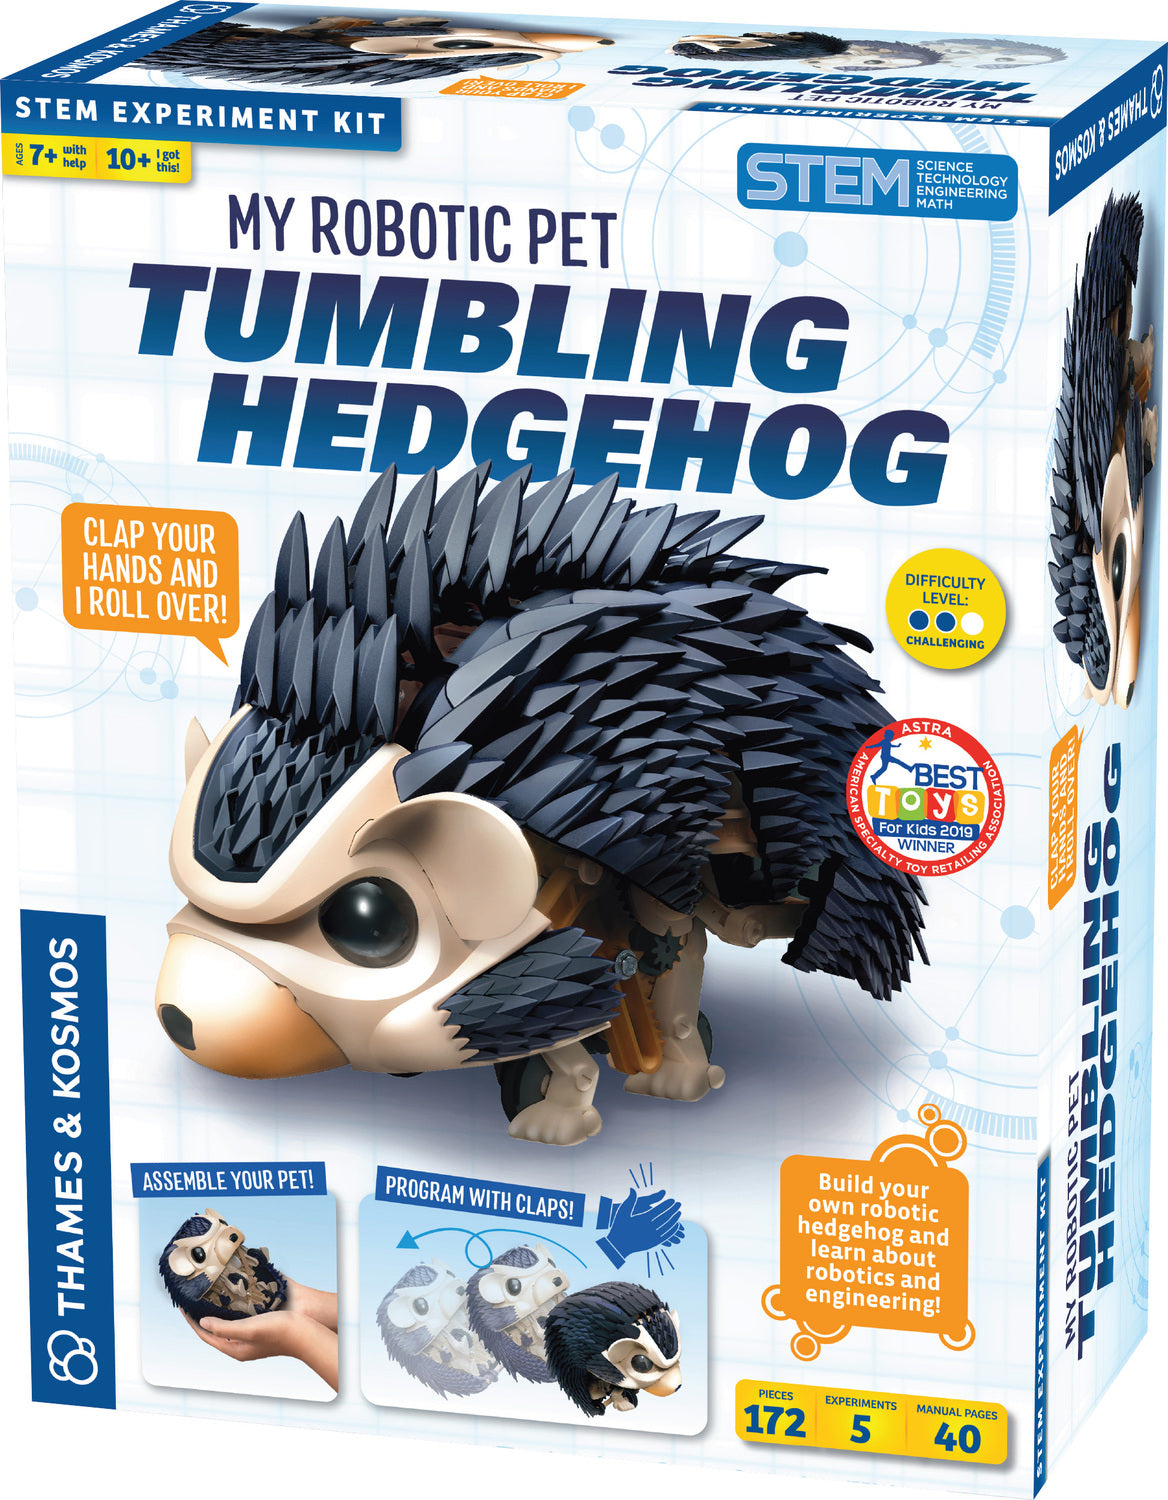 Tumbling Hedgehog - My Robotic Pet